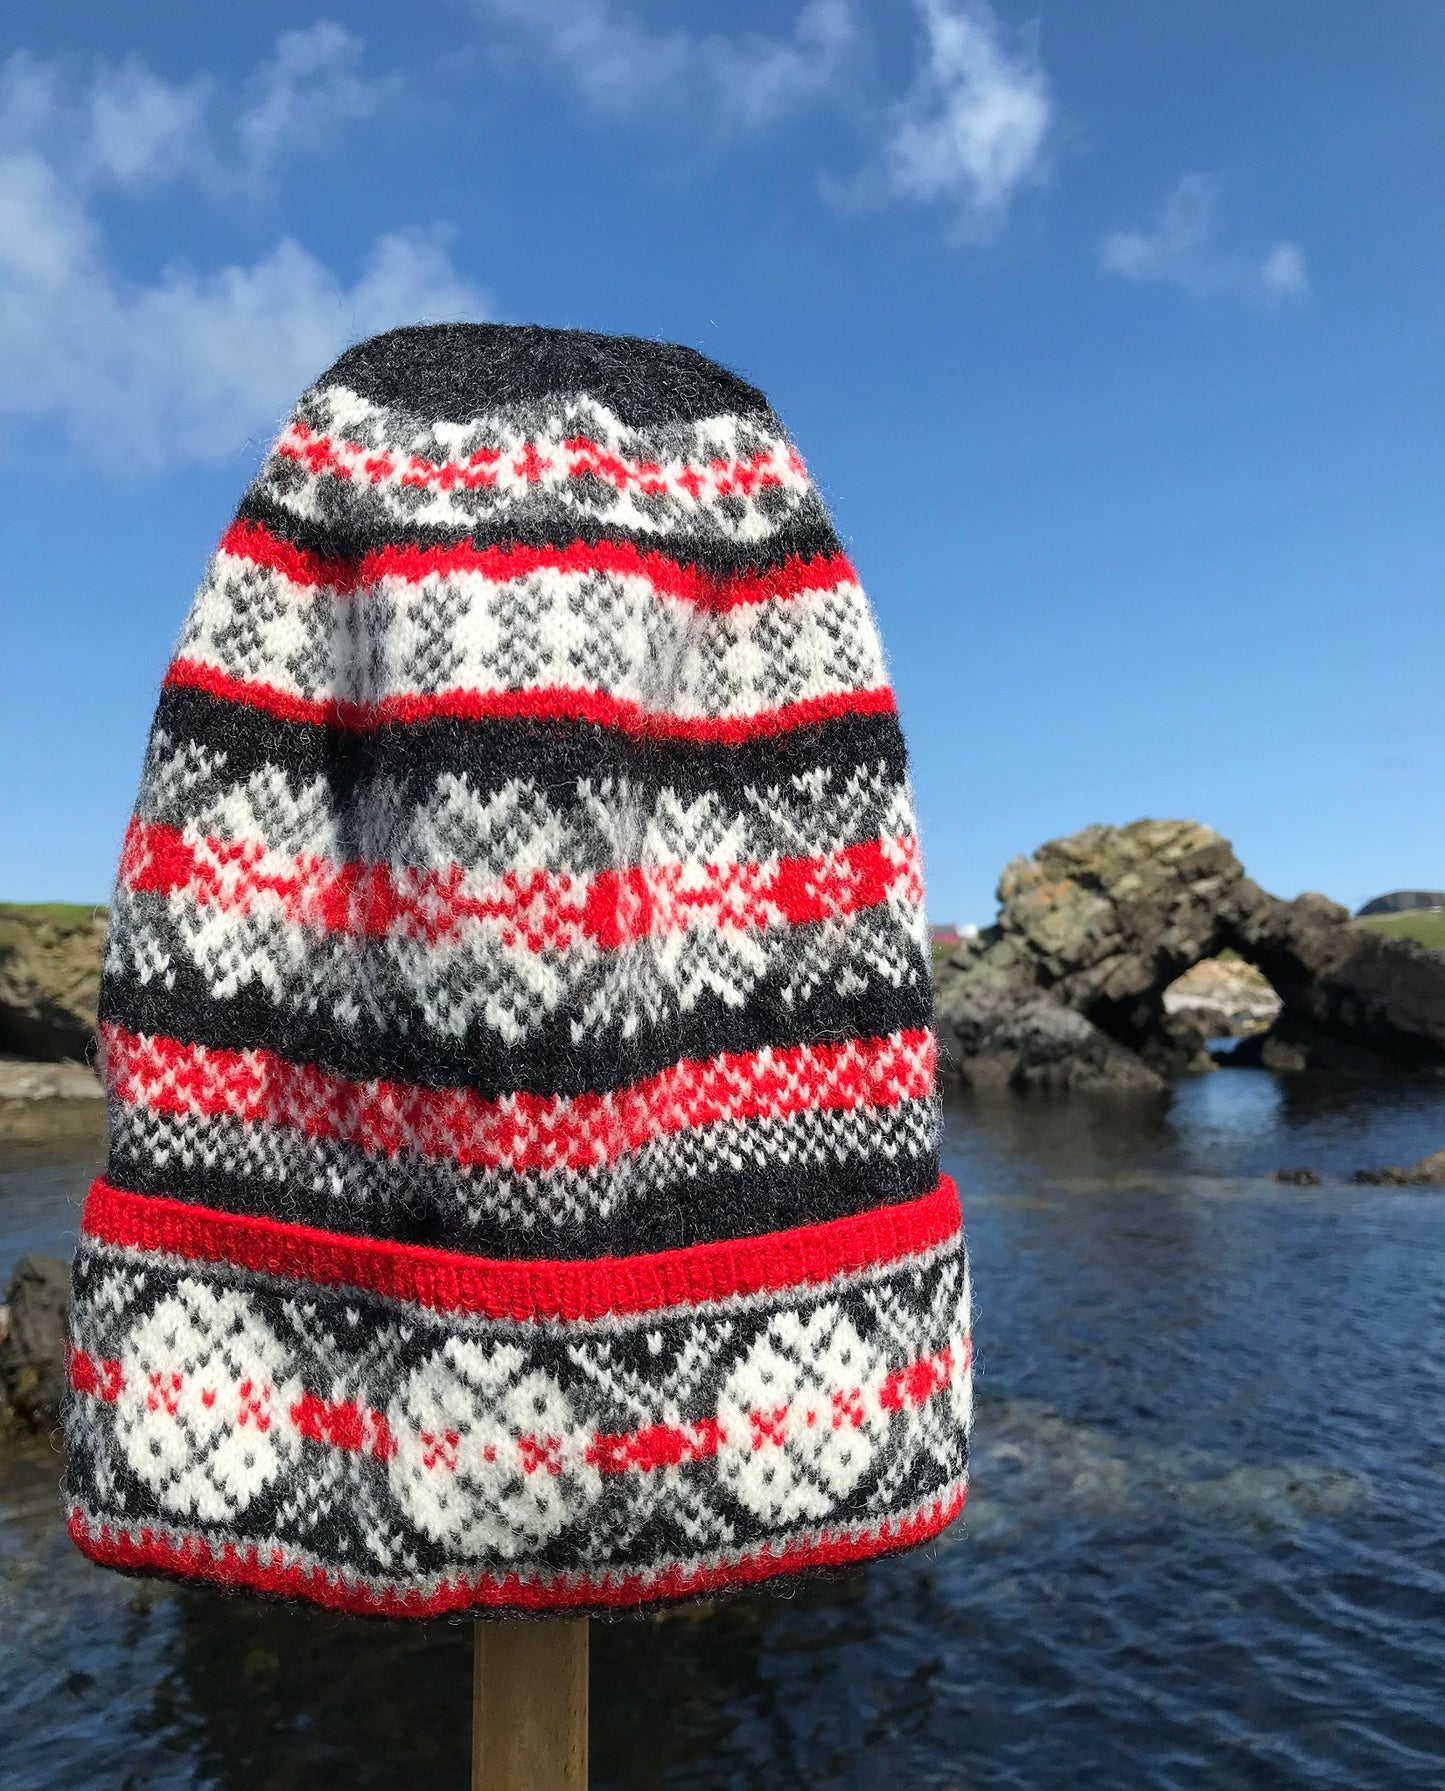 Knitting Jenny Pattern 19: Fair Isle Inspired Fisherman’s Kep and Design Workbook